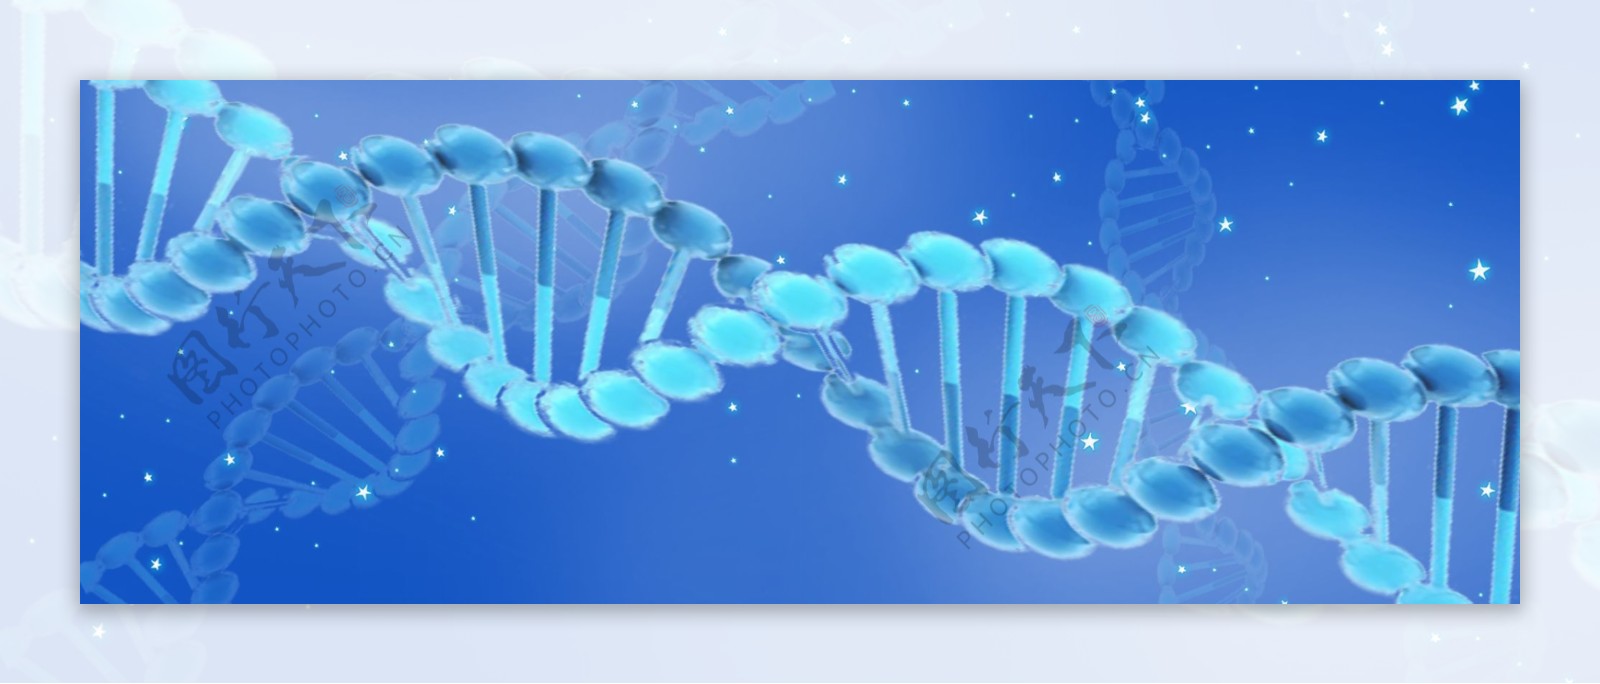 DNA链条科学生命背景图